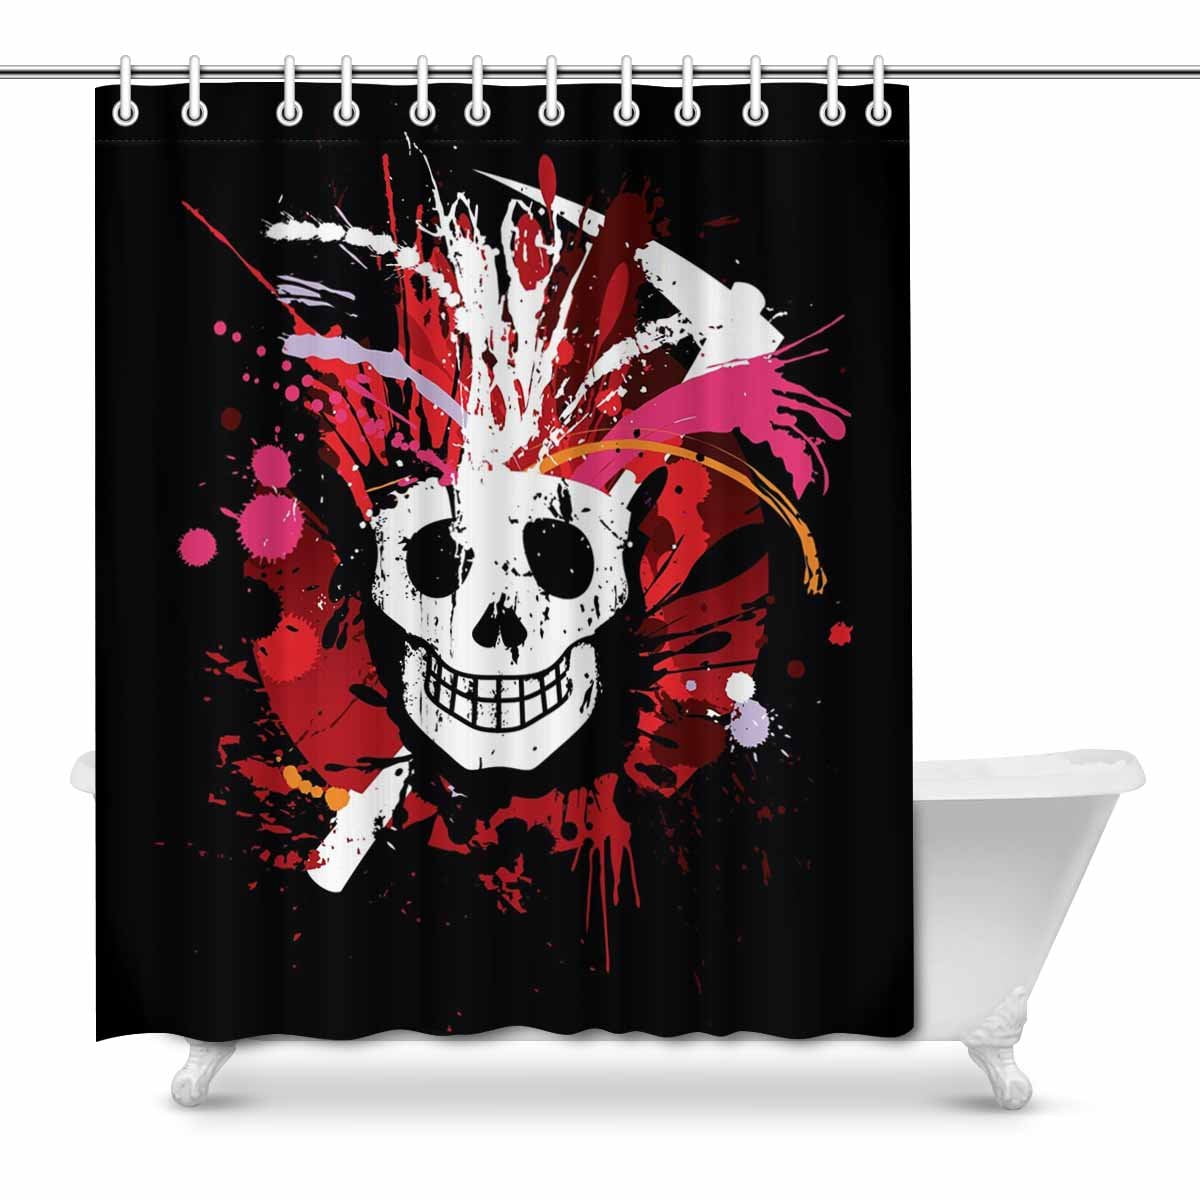 Pop Splatter Skull Bathroom Decor Shower Curtain Set 66x72 Inch Walmart Canada